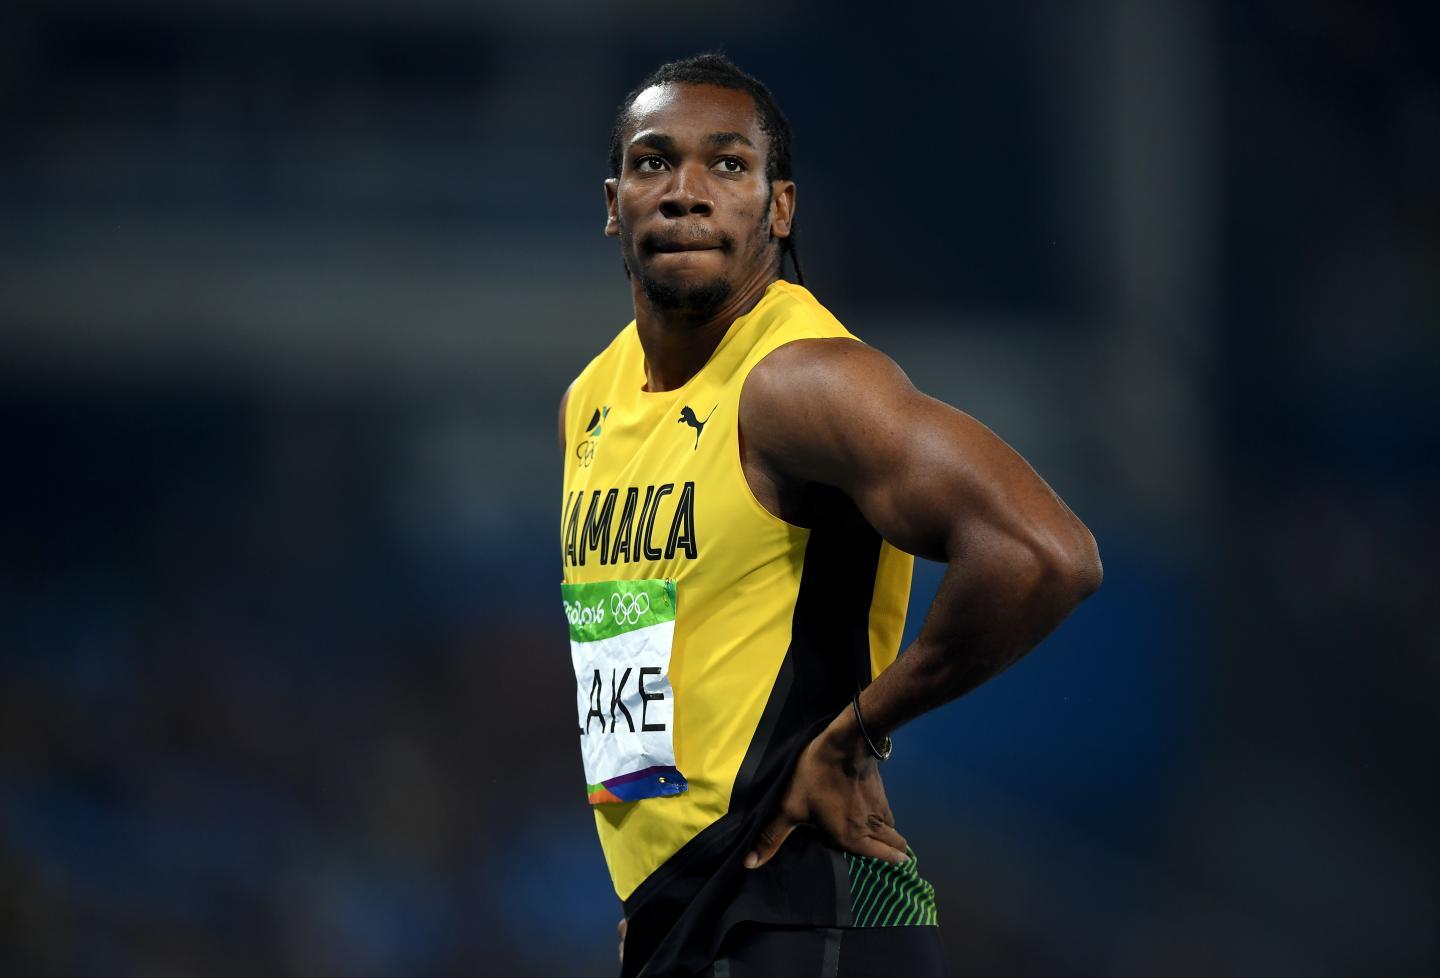 Rio 2016: Shocks In 200 Meters As Usain Bolt Eases Through